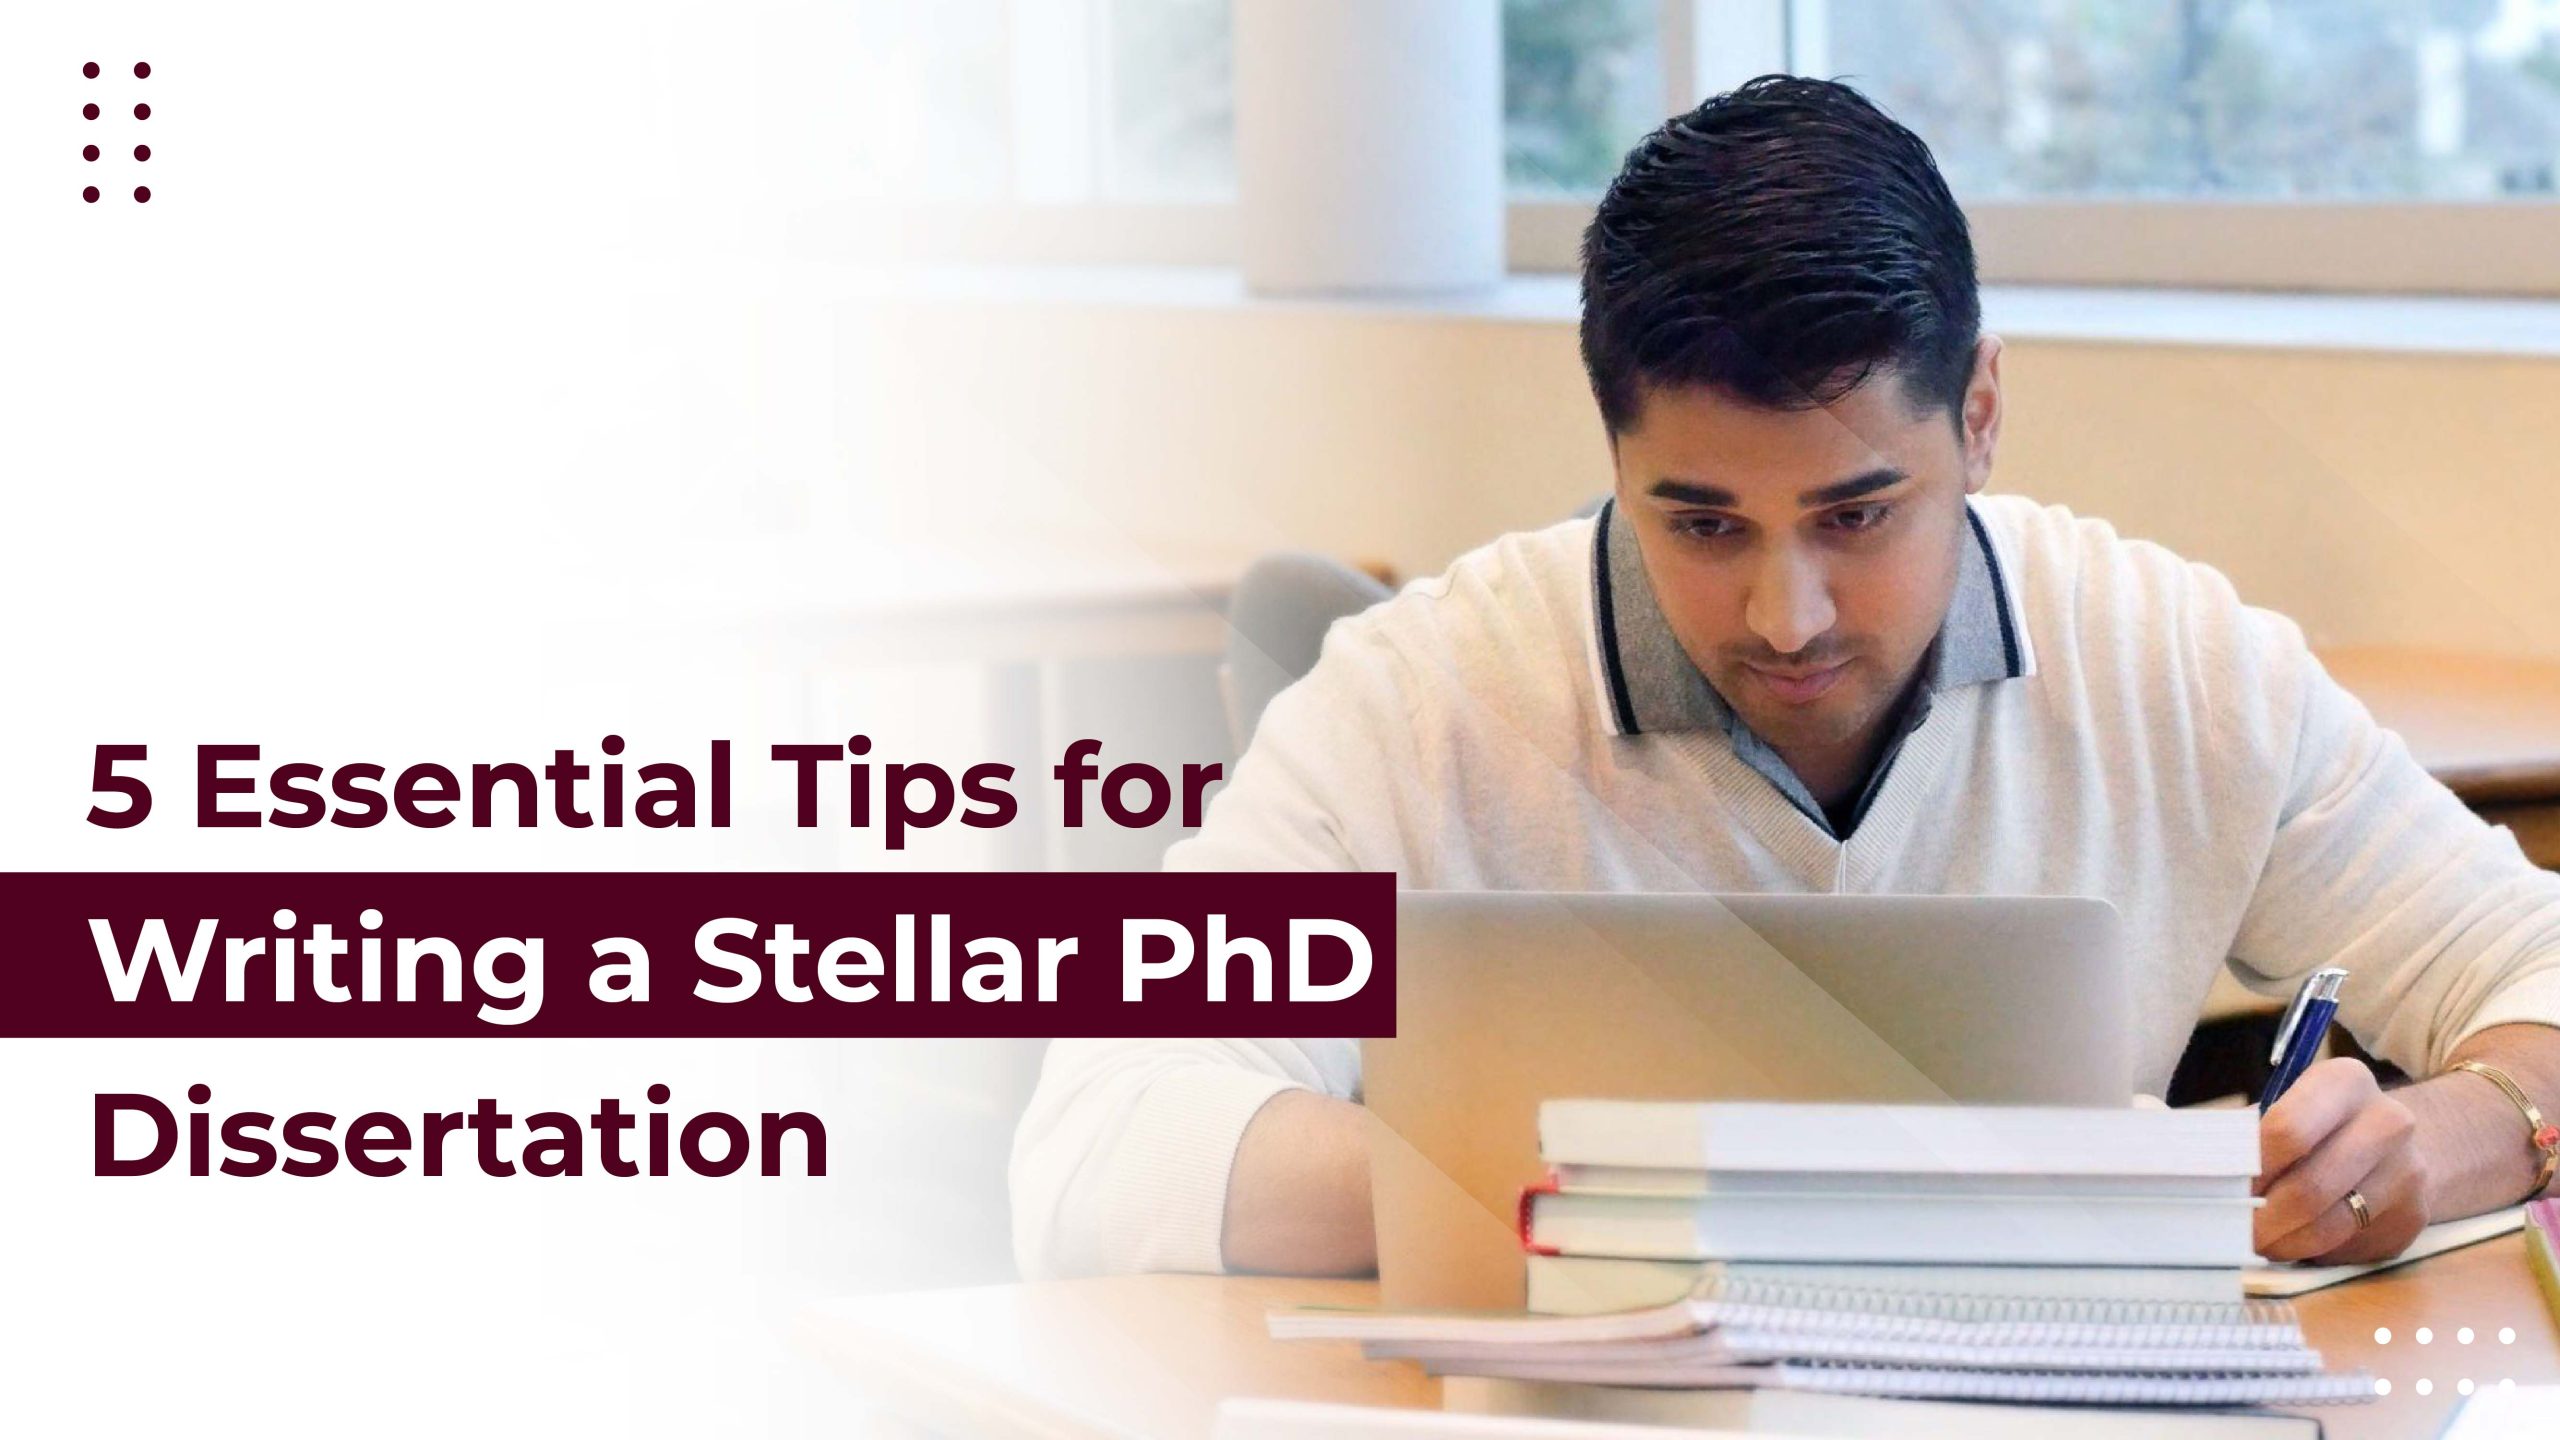 5 Essential Tips for Writing a Stellar PhD Dissertation